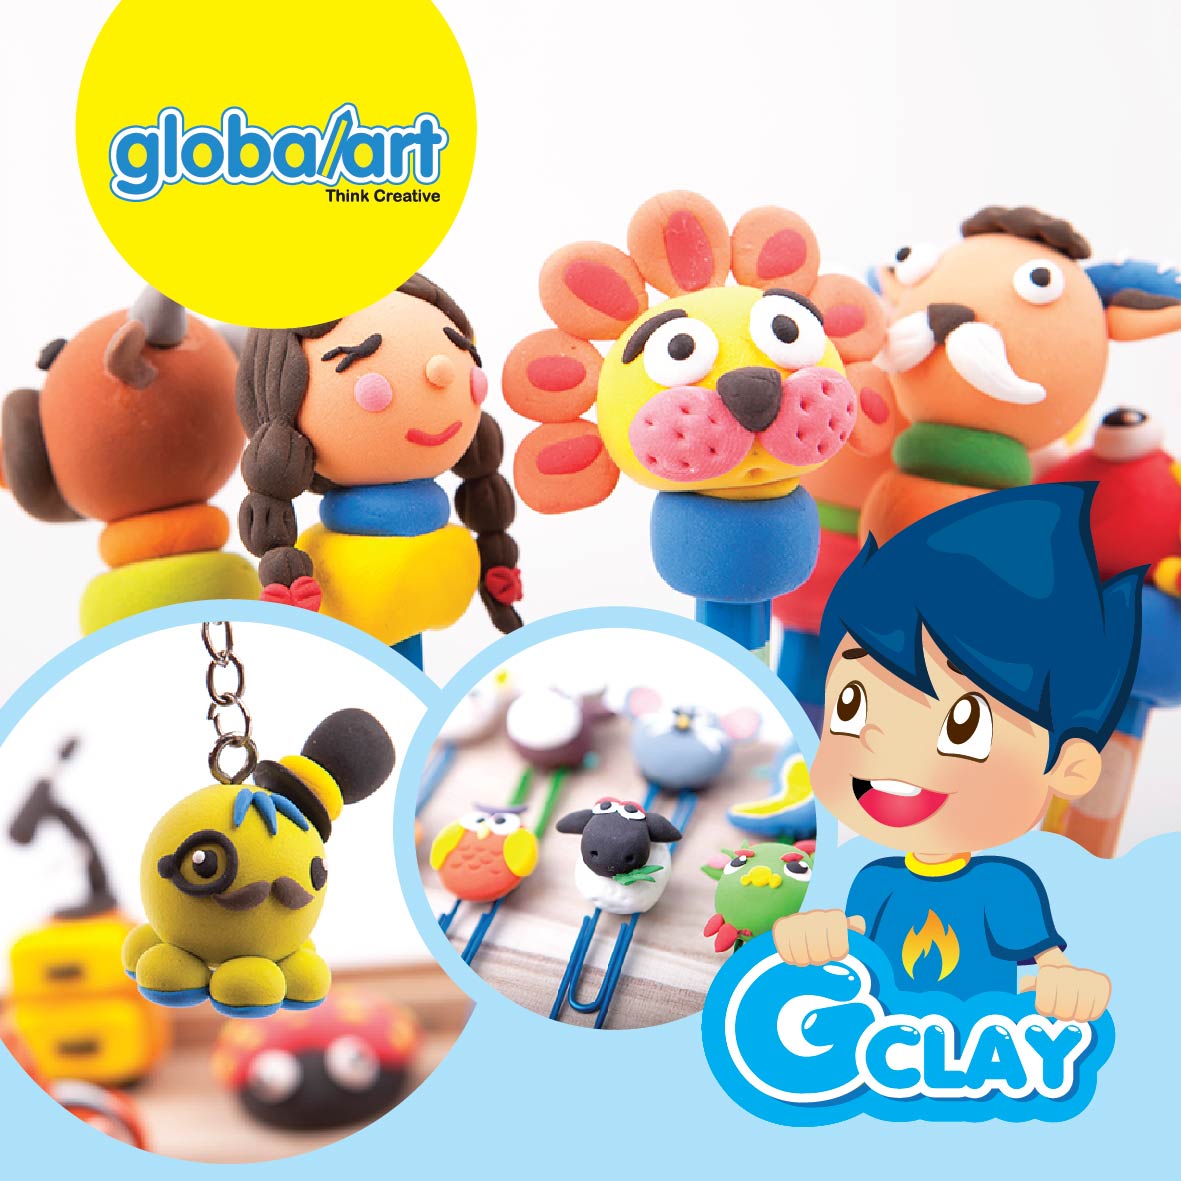 G-clay-01